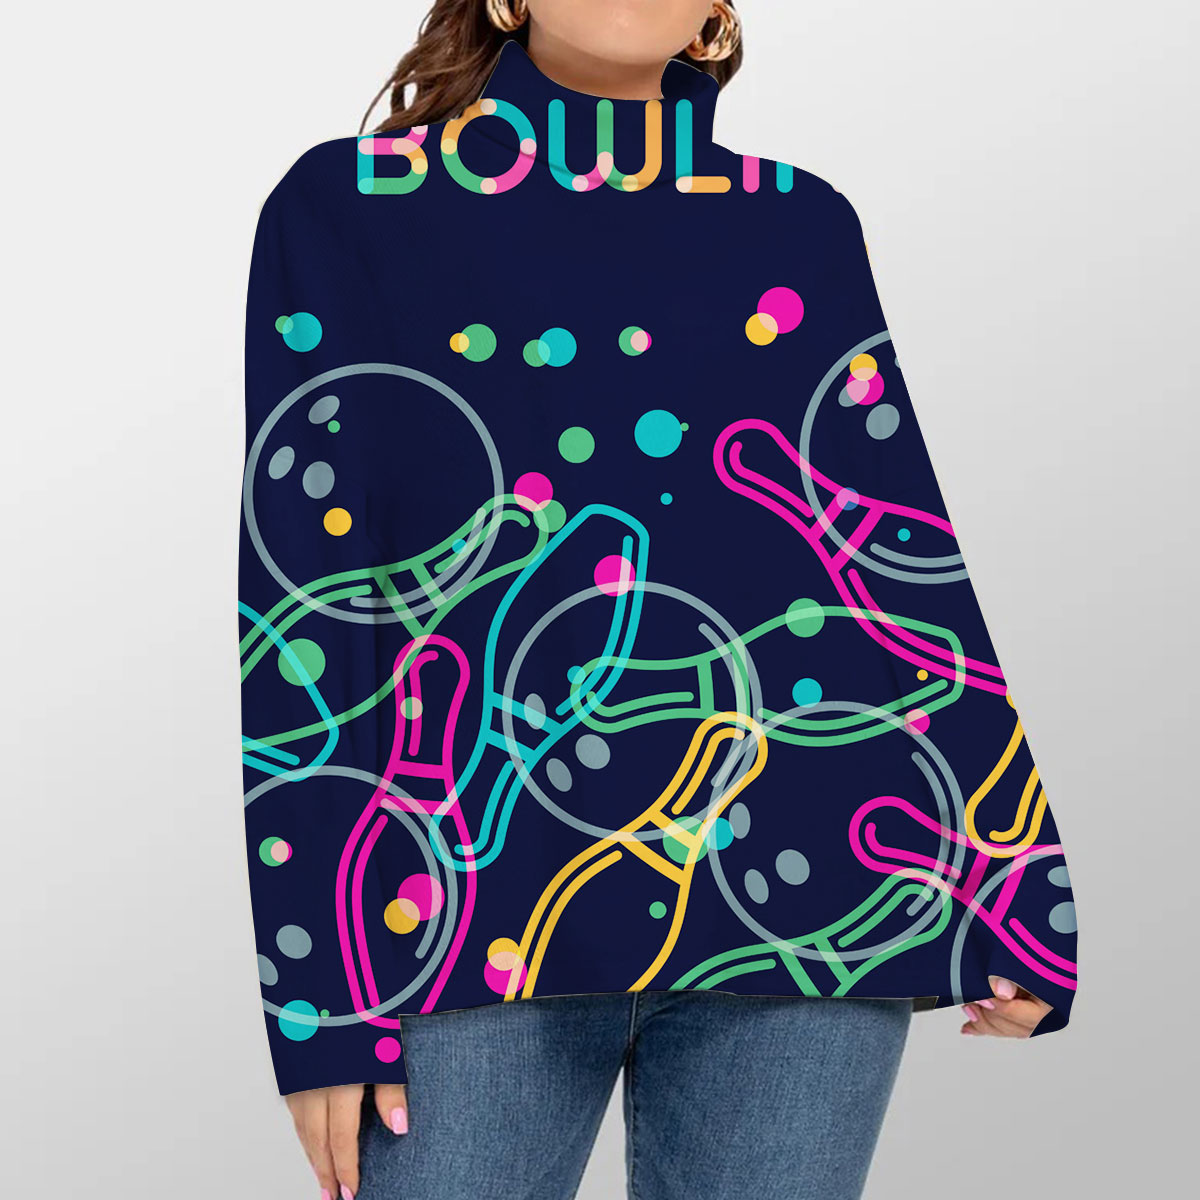 Neon Bowling Turtleneck Sweater